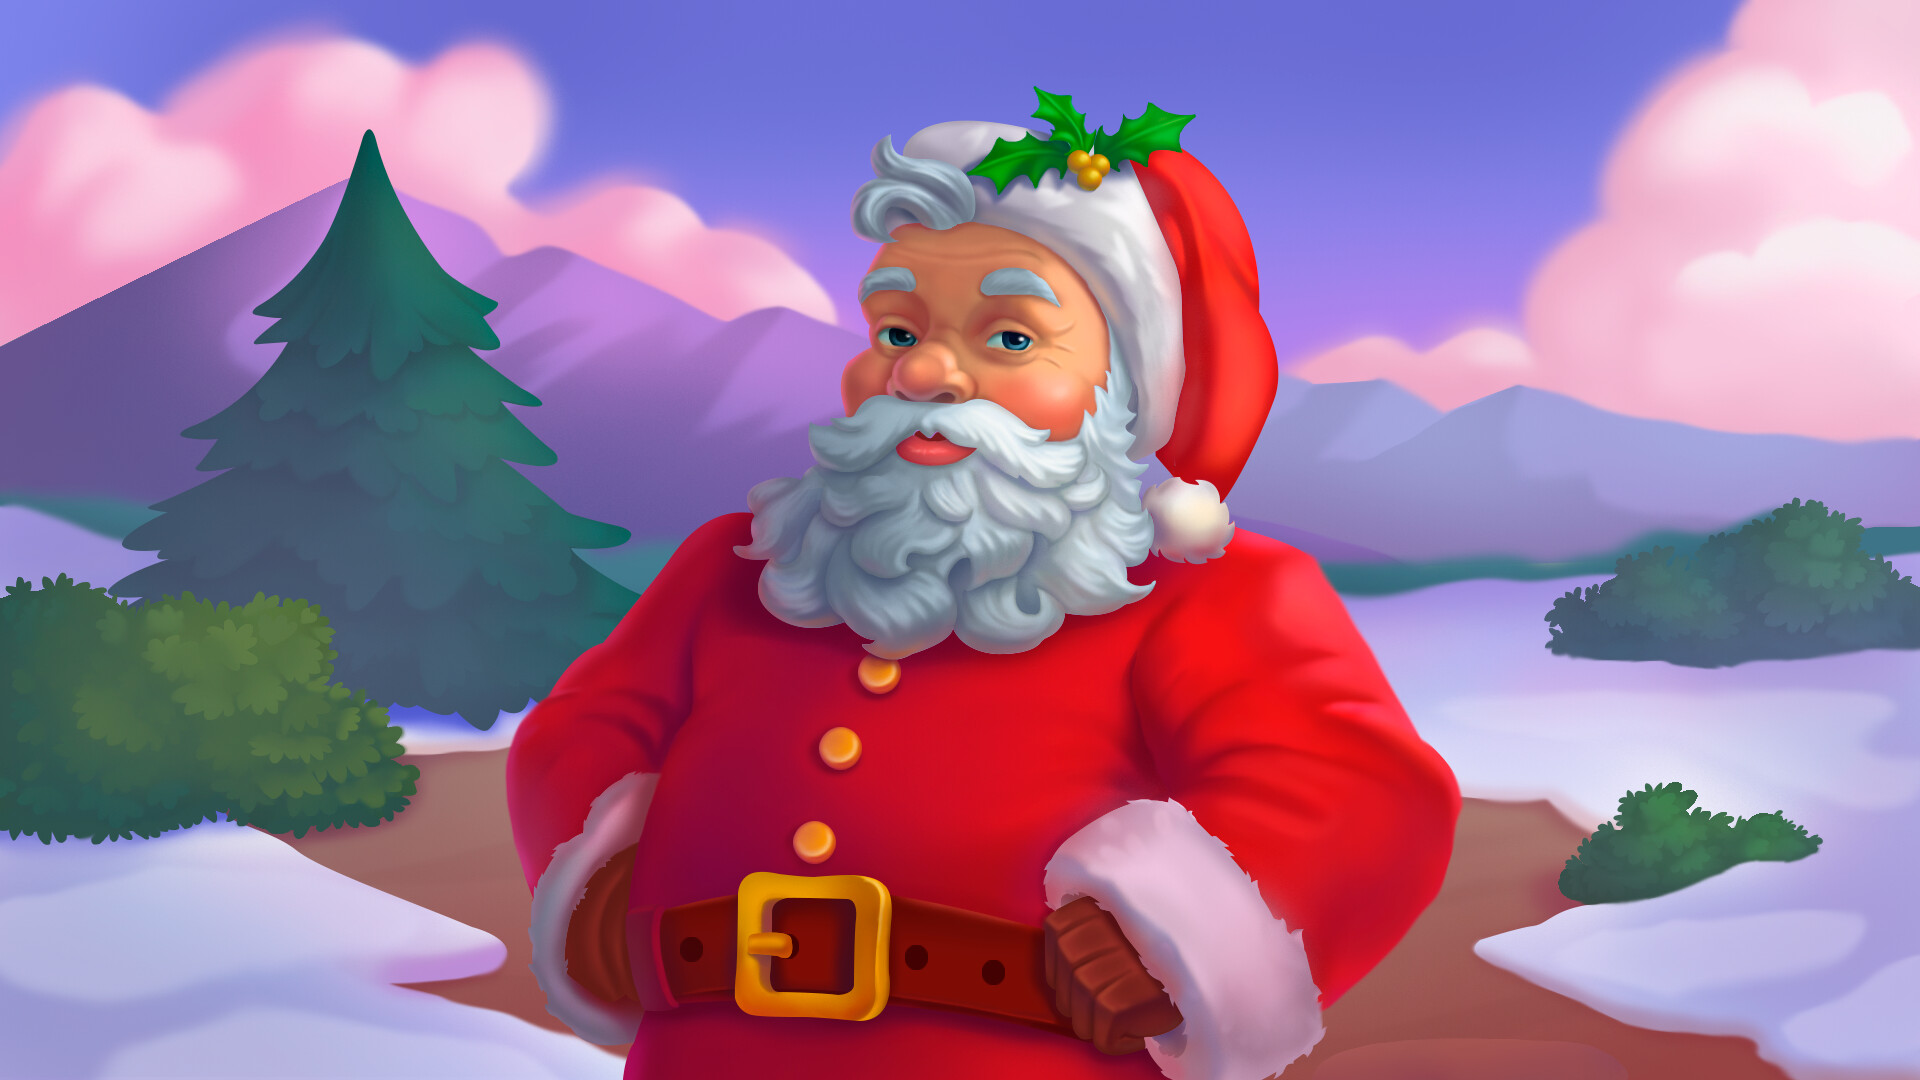 ArtStation - Santa Claus Illustration with background